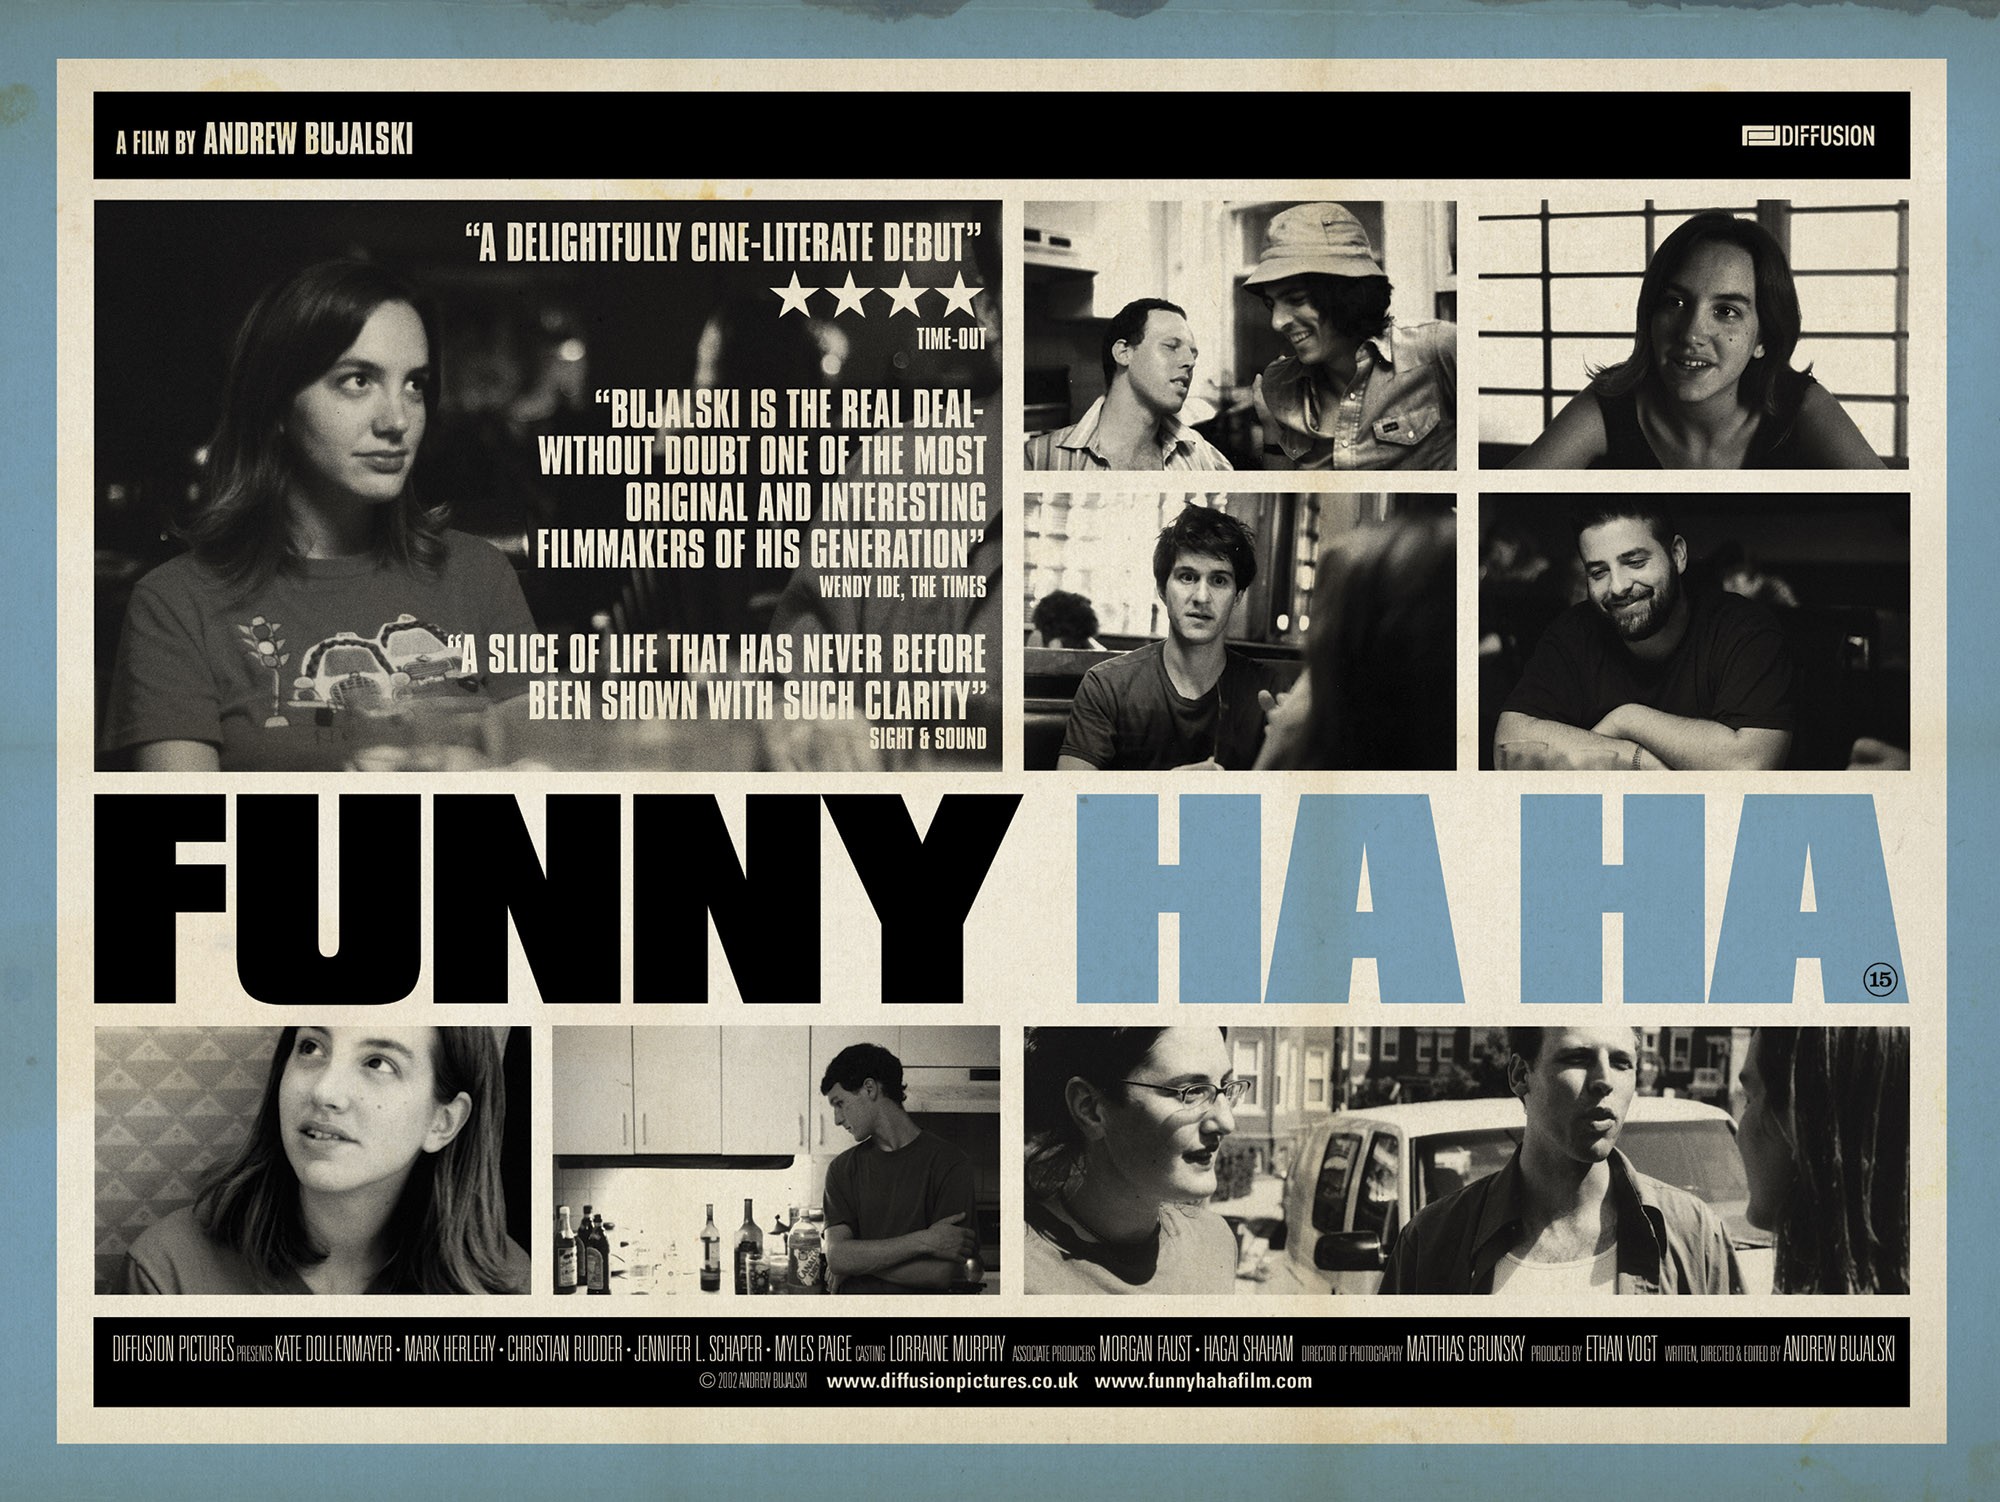 Mega Sized Movie Poster Image for Funny Ha Ha (#2 of 2)